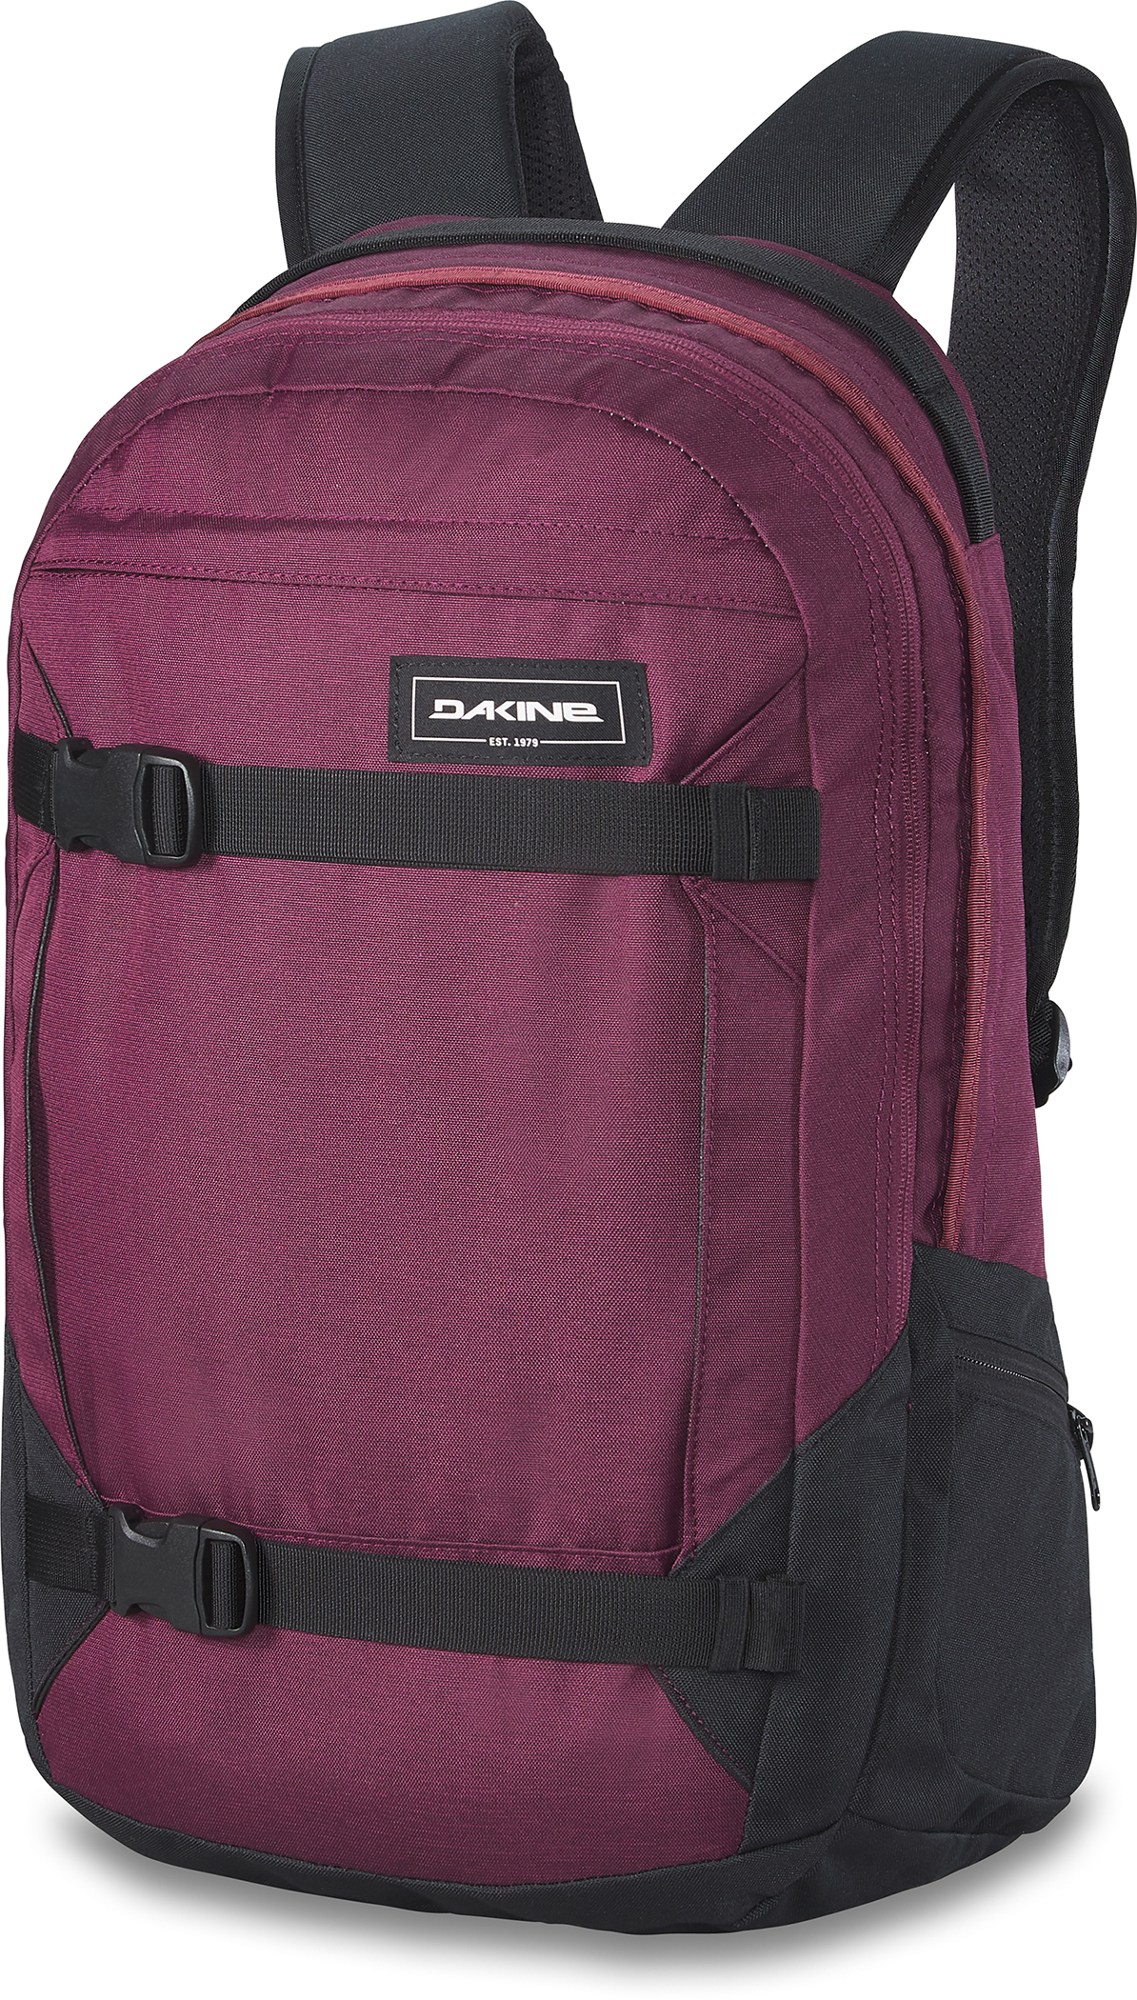 Снежный рюкзак Mission 25 л — женский DAKINE, фиолетовый цена и фото